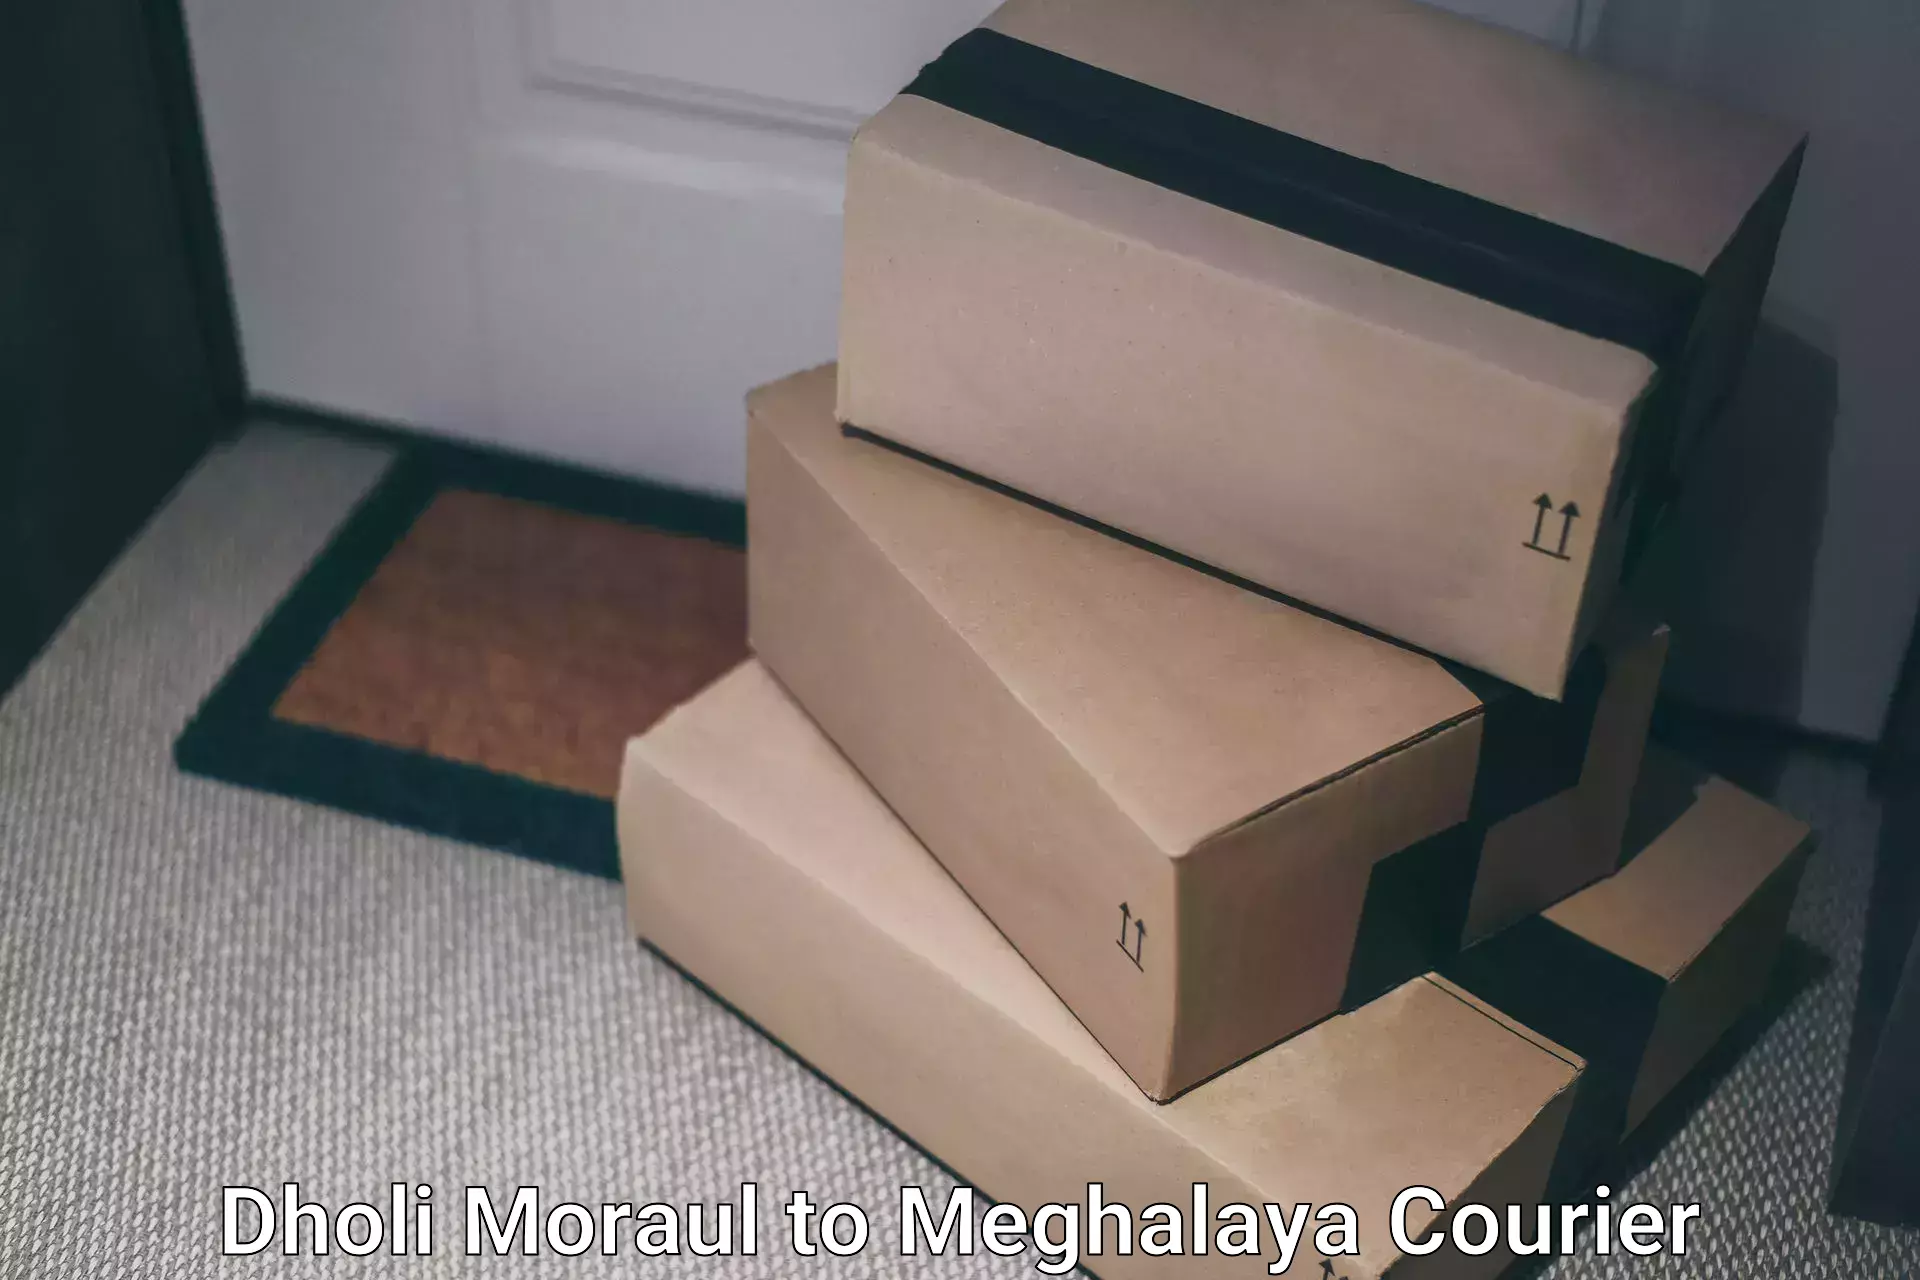 Express courier capabilities Dholi Moraul to Meghalaya